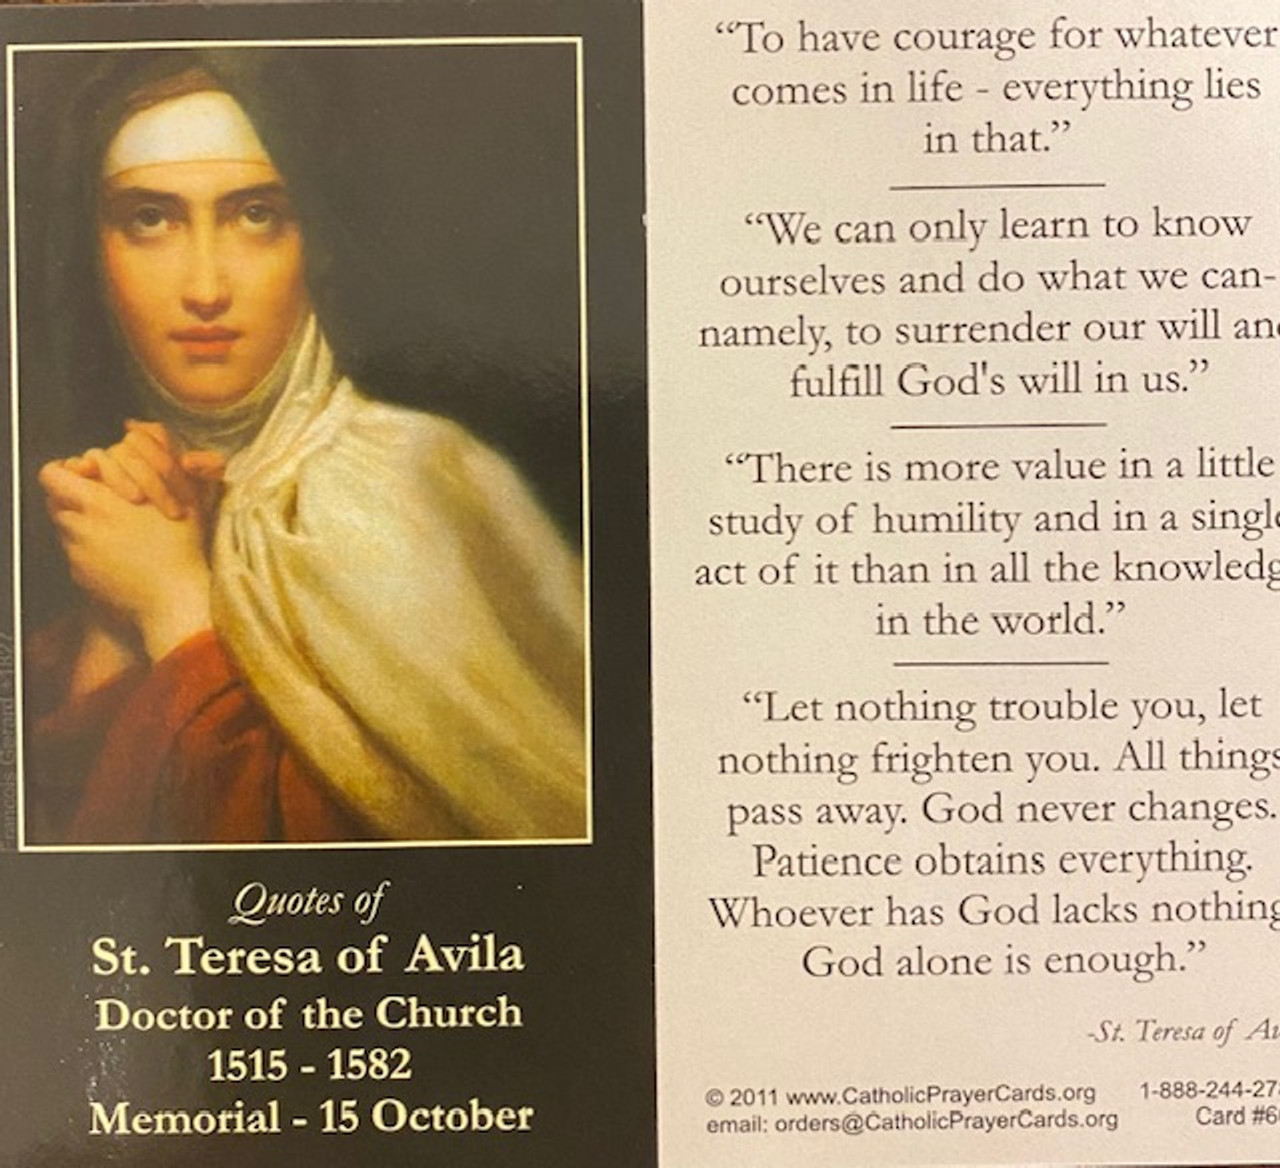 St. Teresa of Avila Prayer Card with Quotes